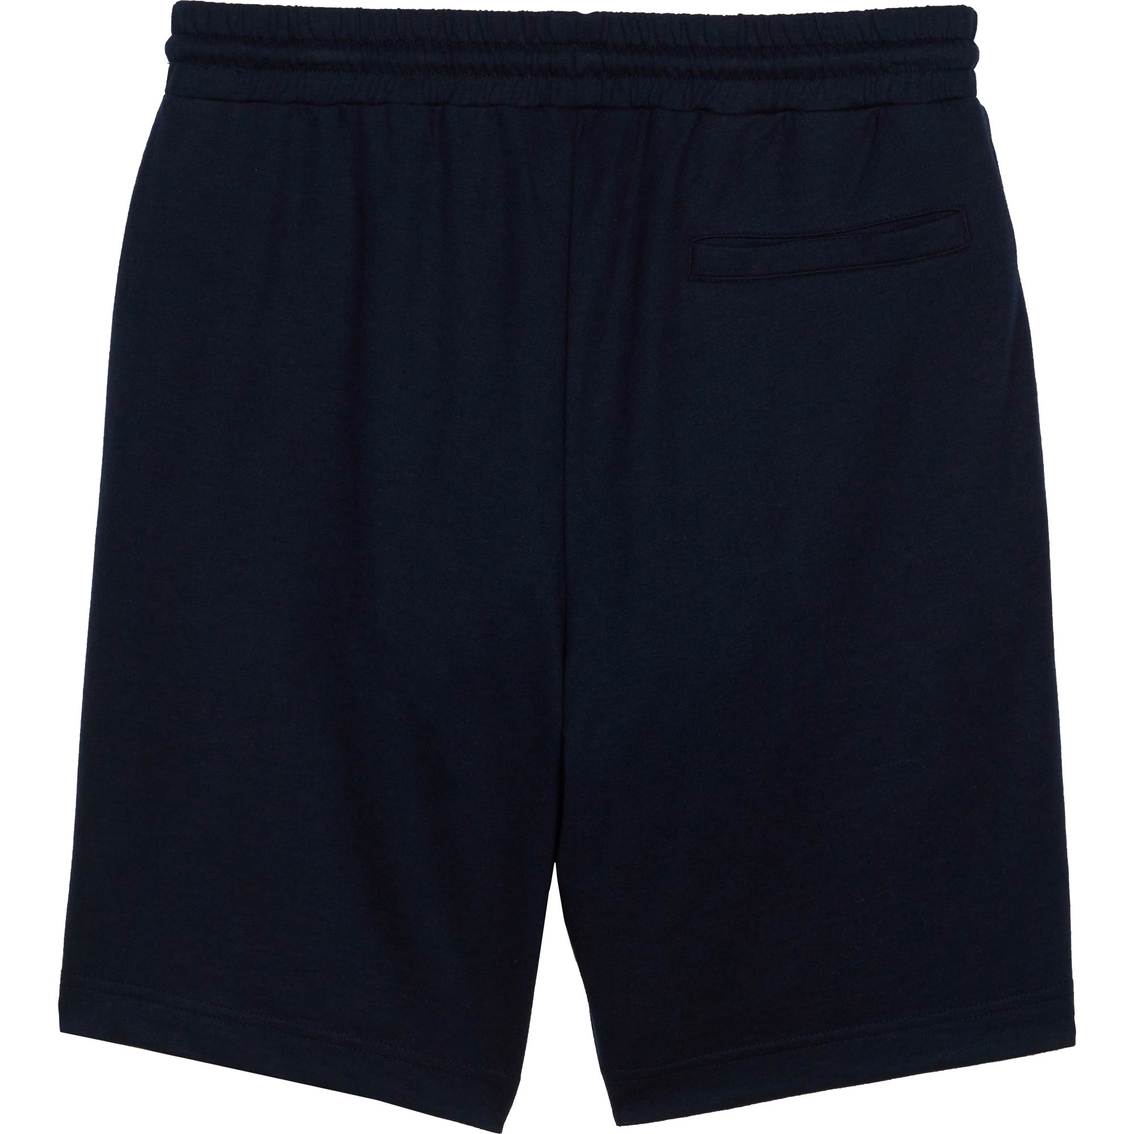 Copper & Oak French Terry Drawstring Shorts | Shorts | Clothing ...